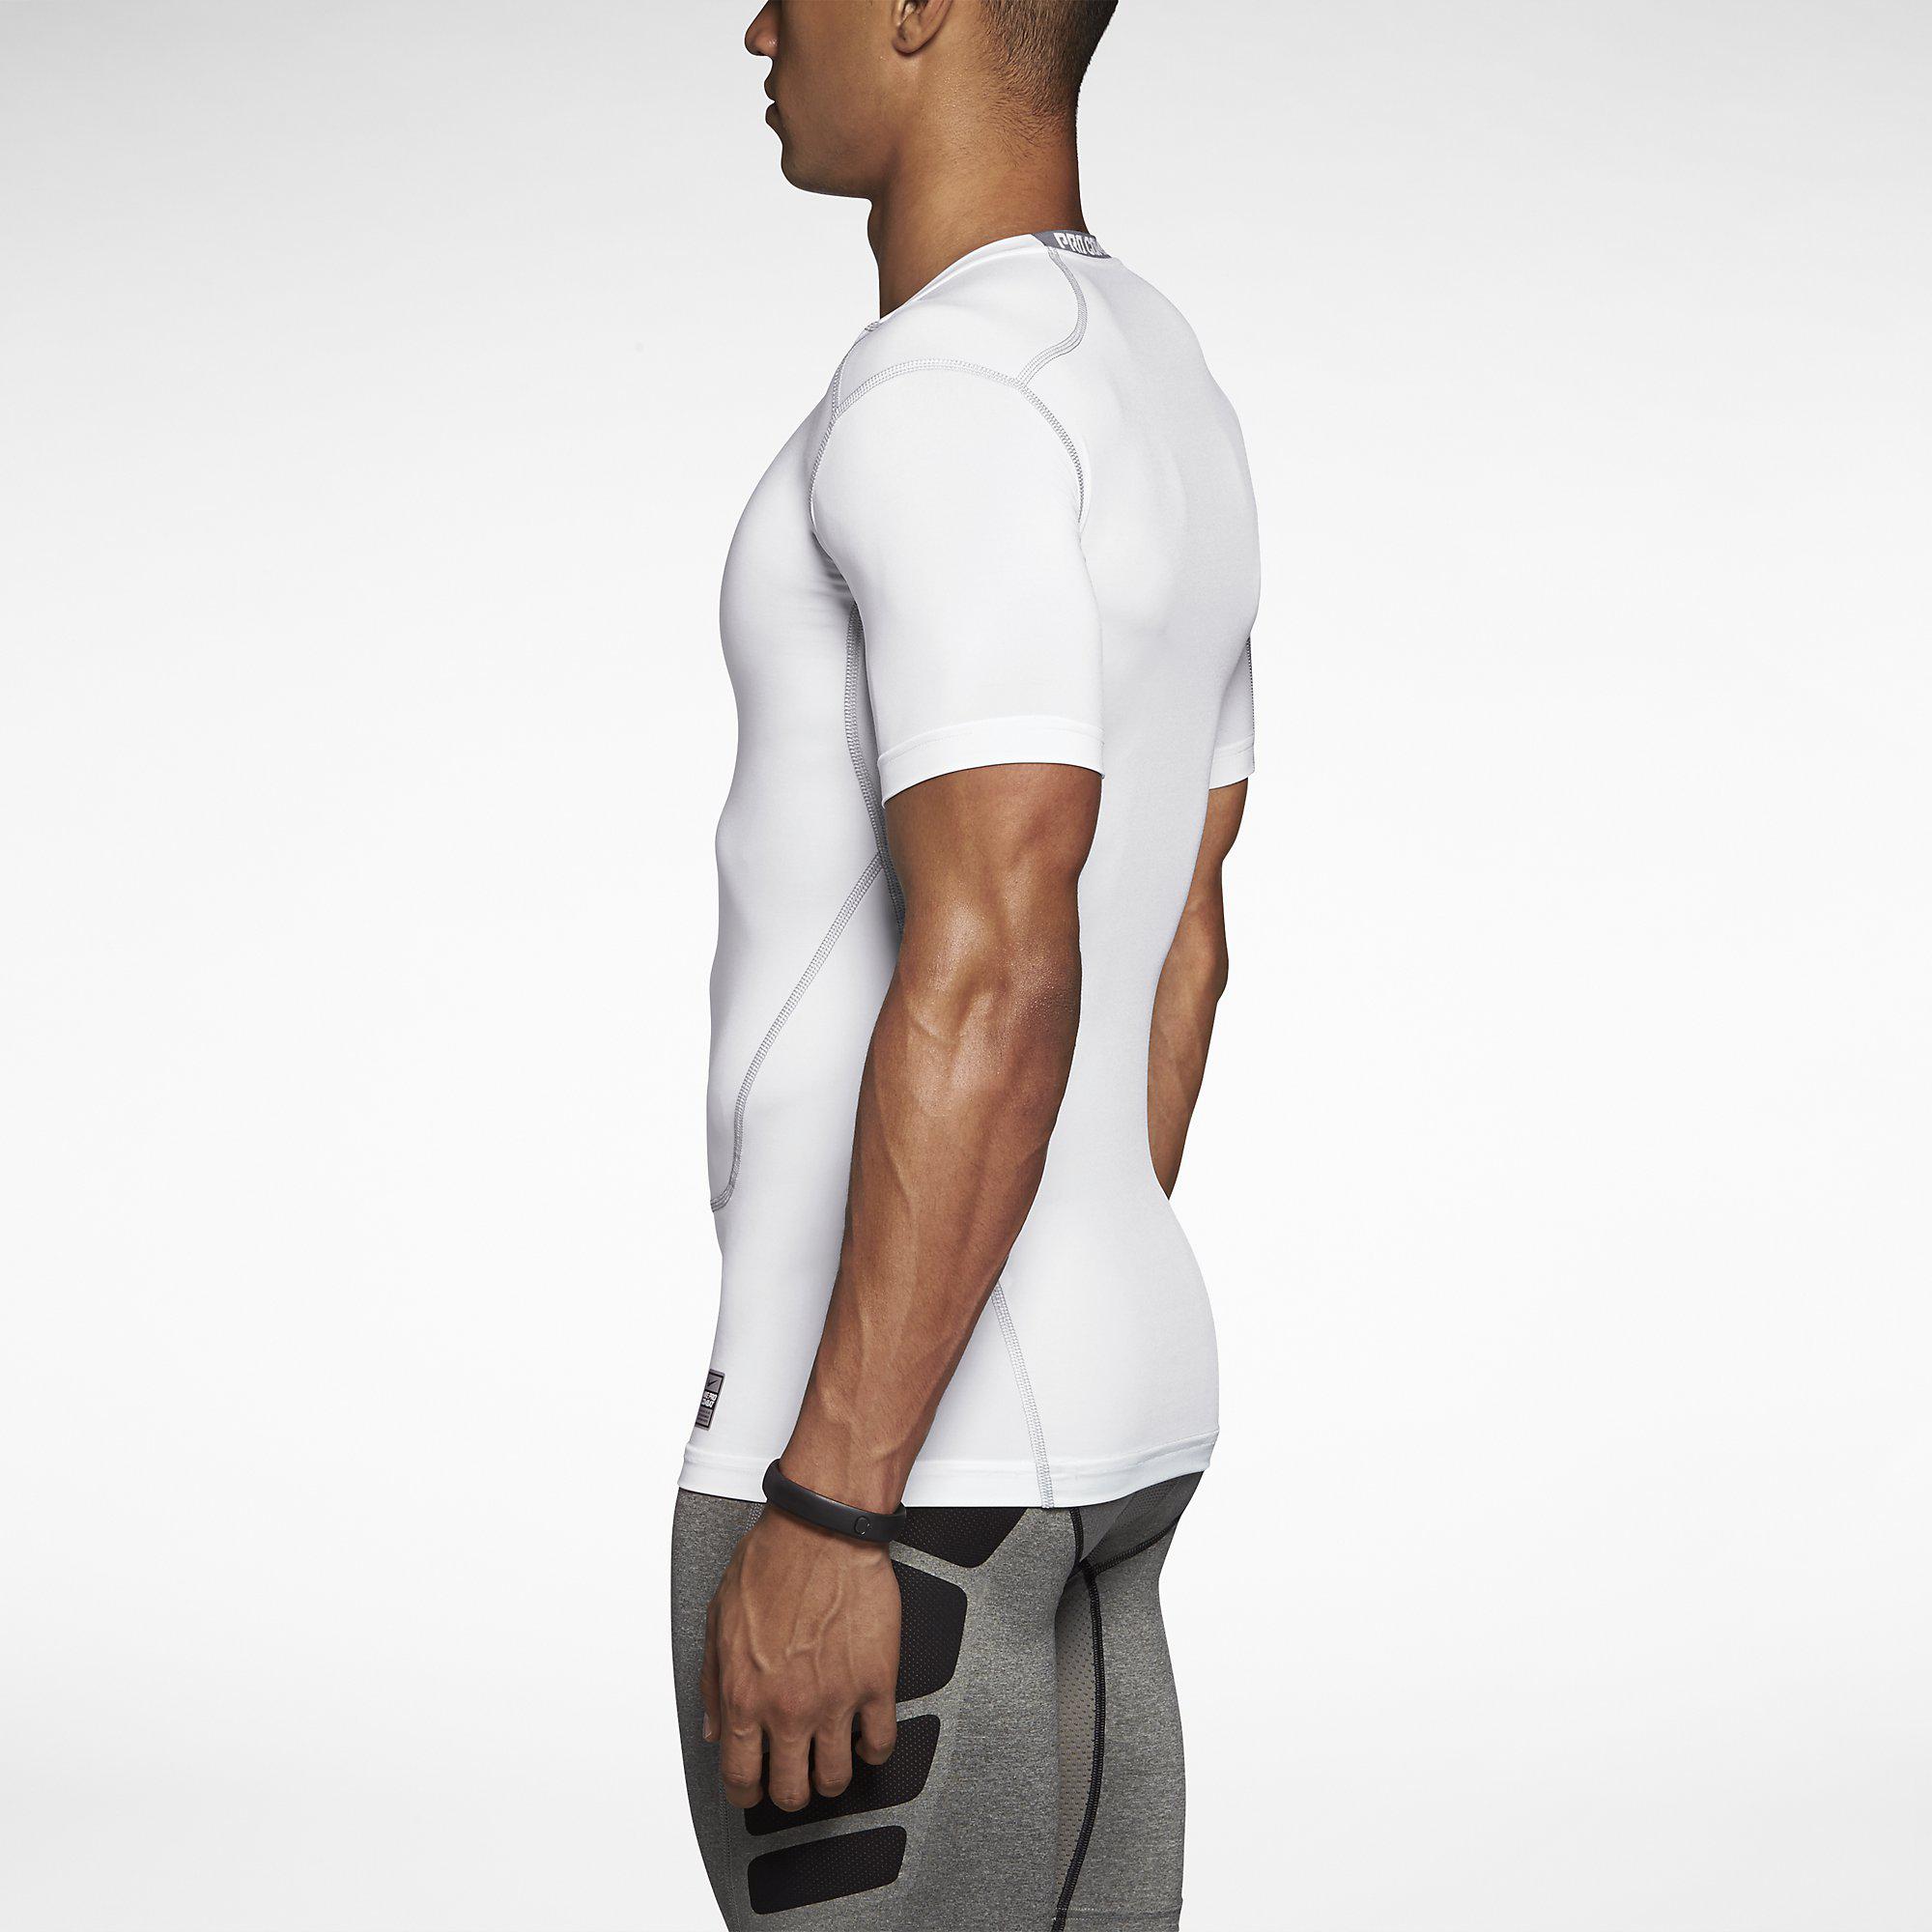 Nike Pro 2.0 Combat Core Short Sleeve Shirt White/Cool Grey - Tennisnuts.com